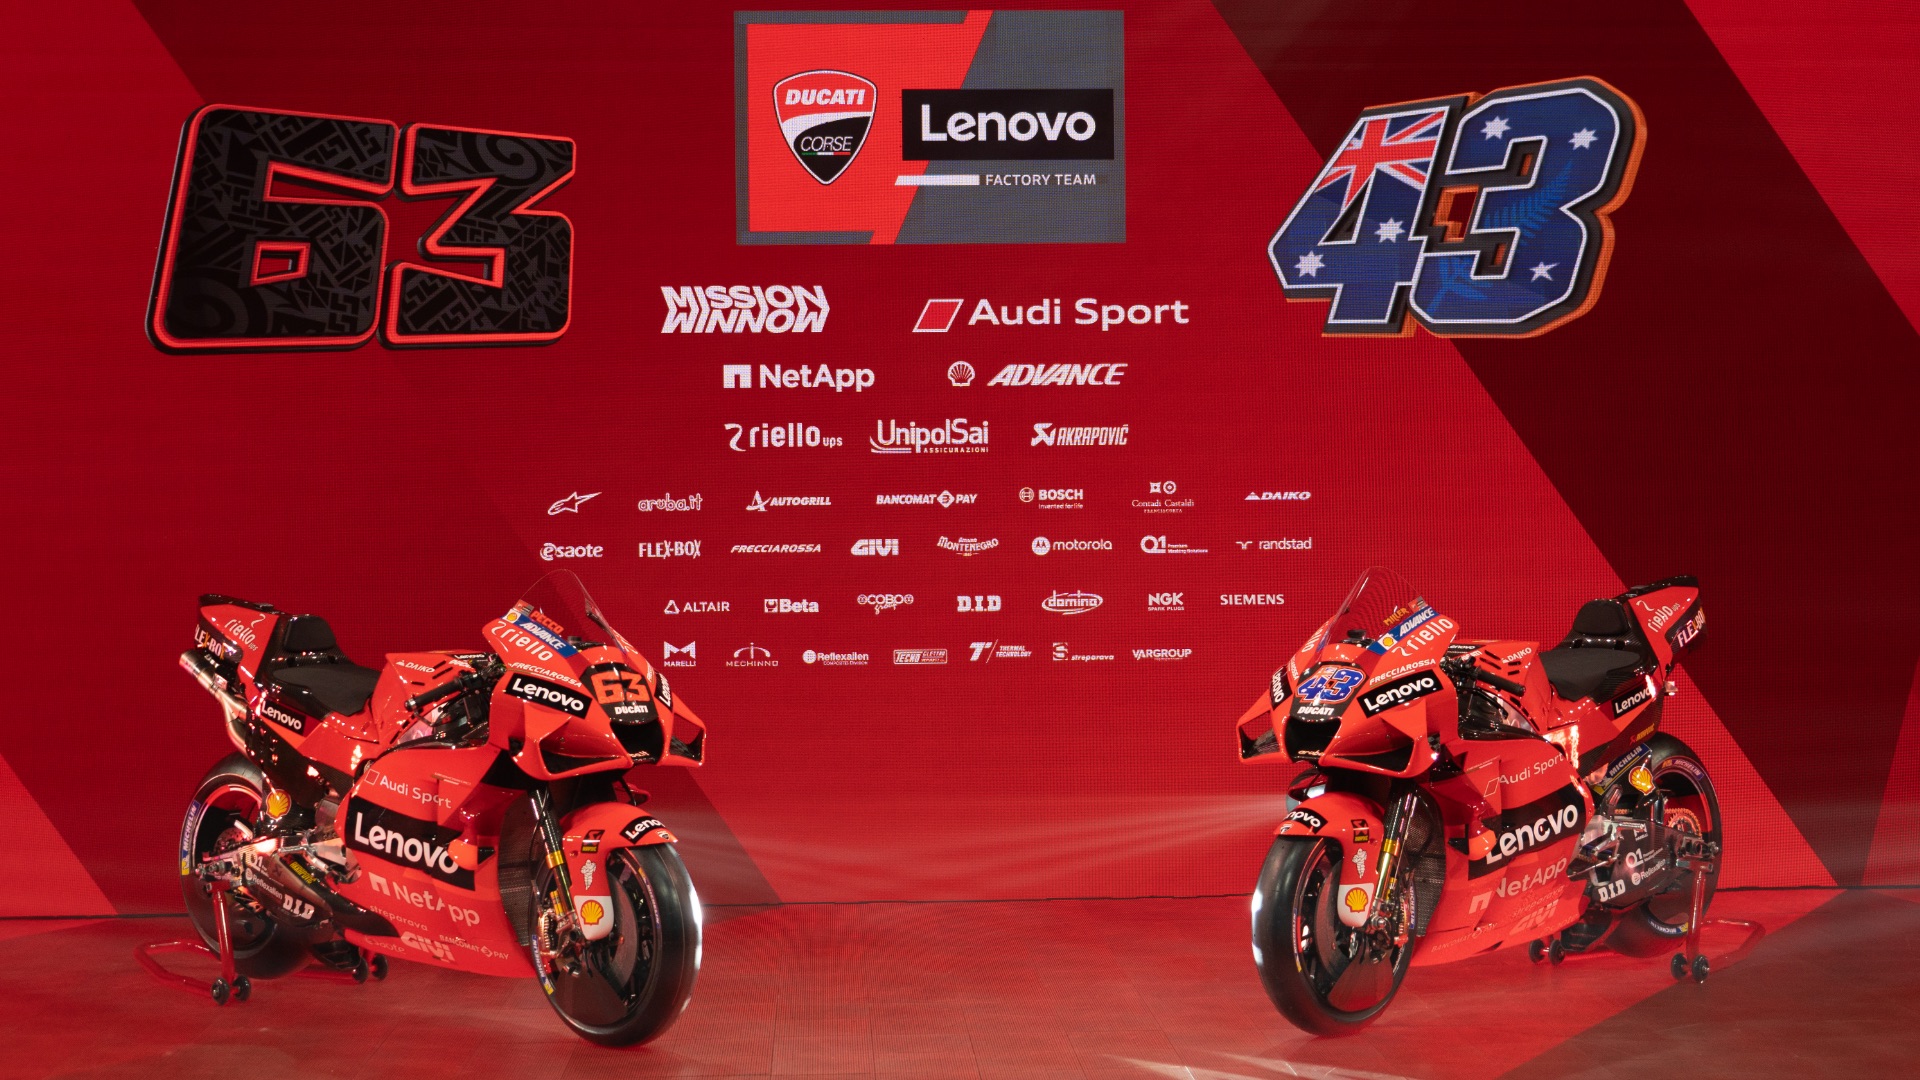 The 2021 Ducati Lenovo Team presented online